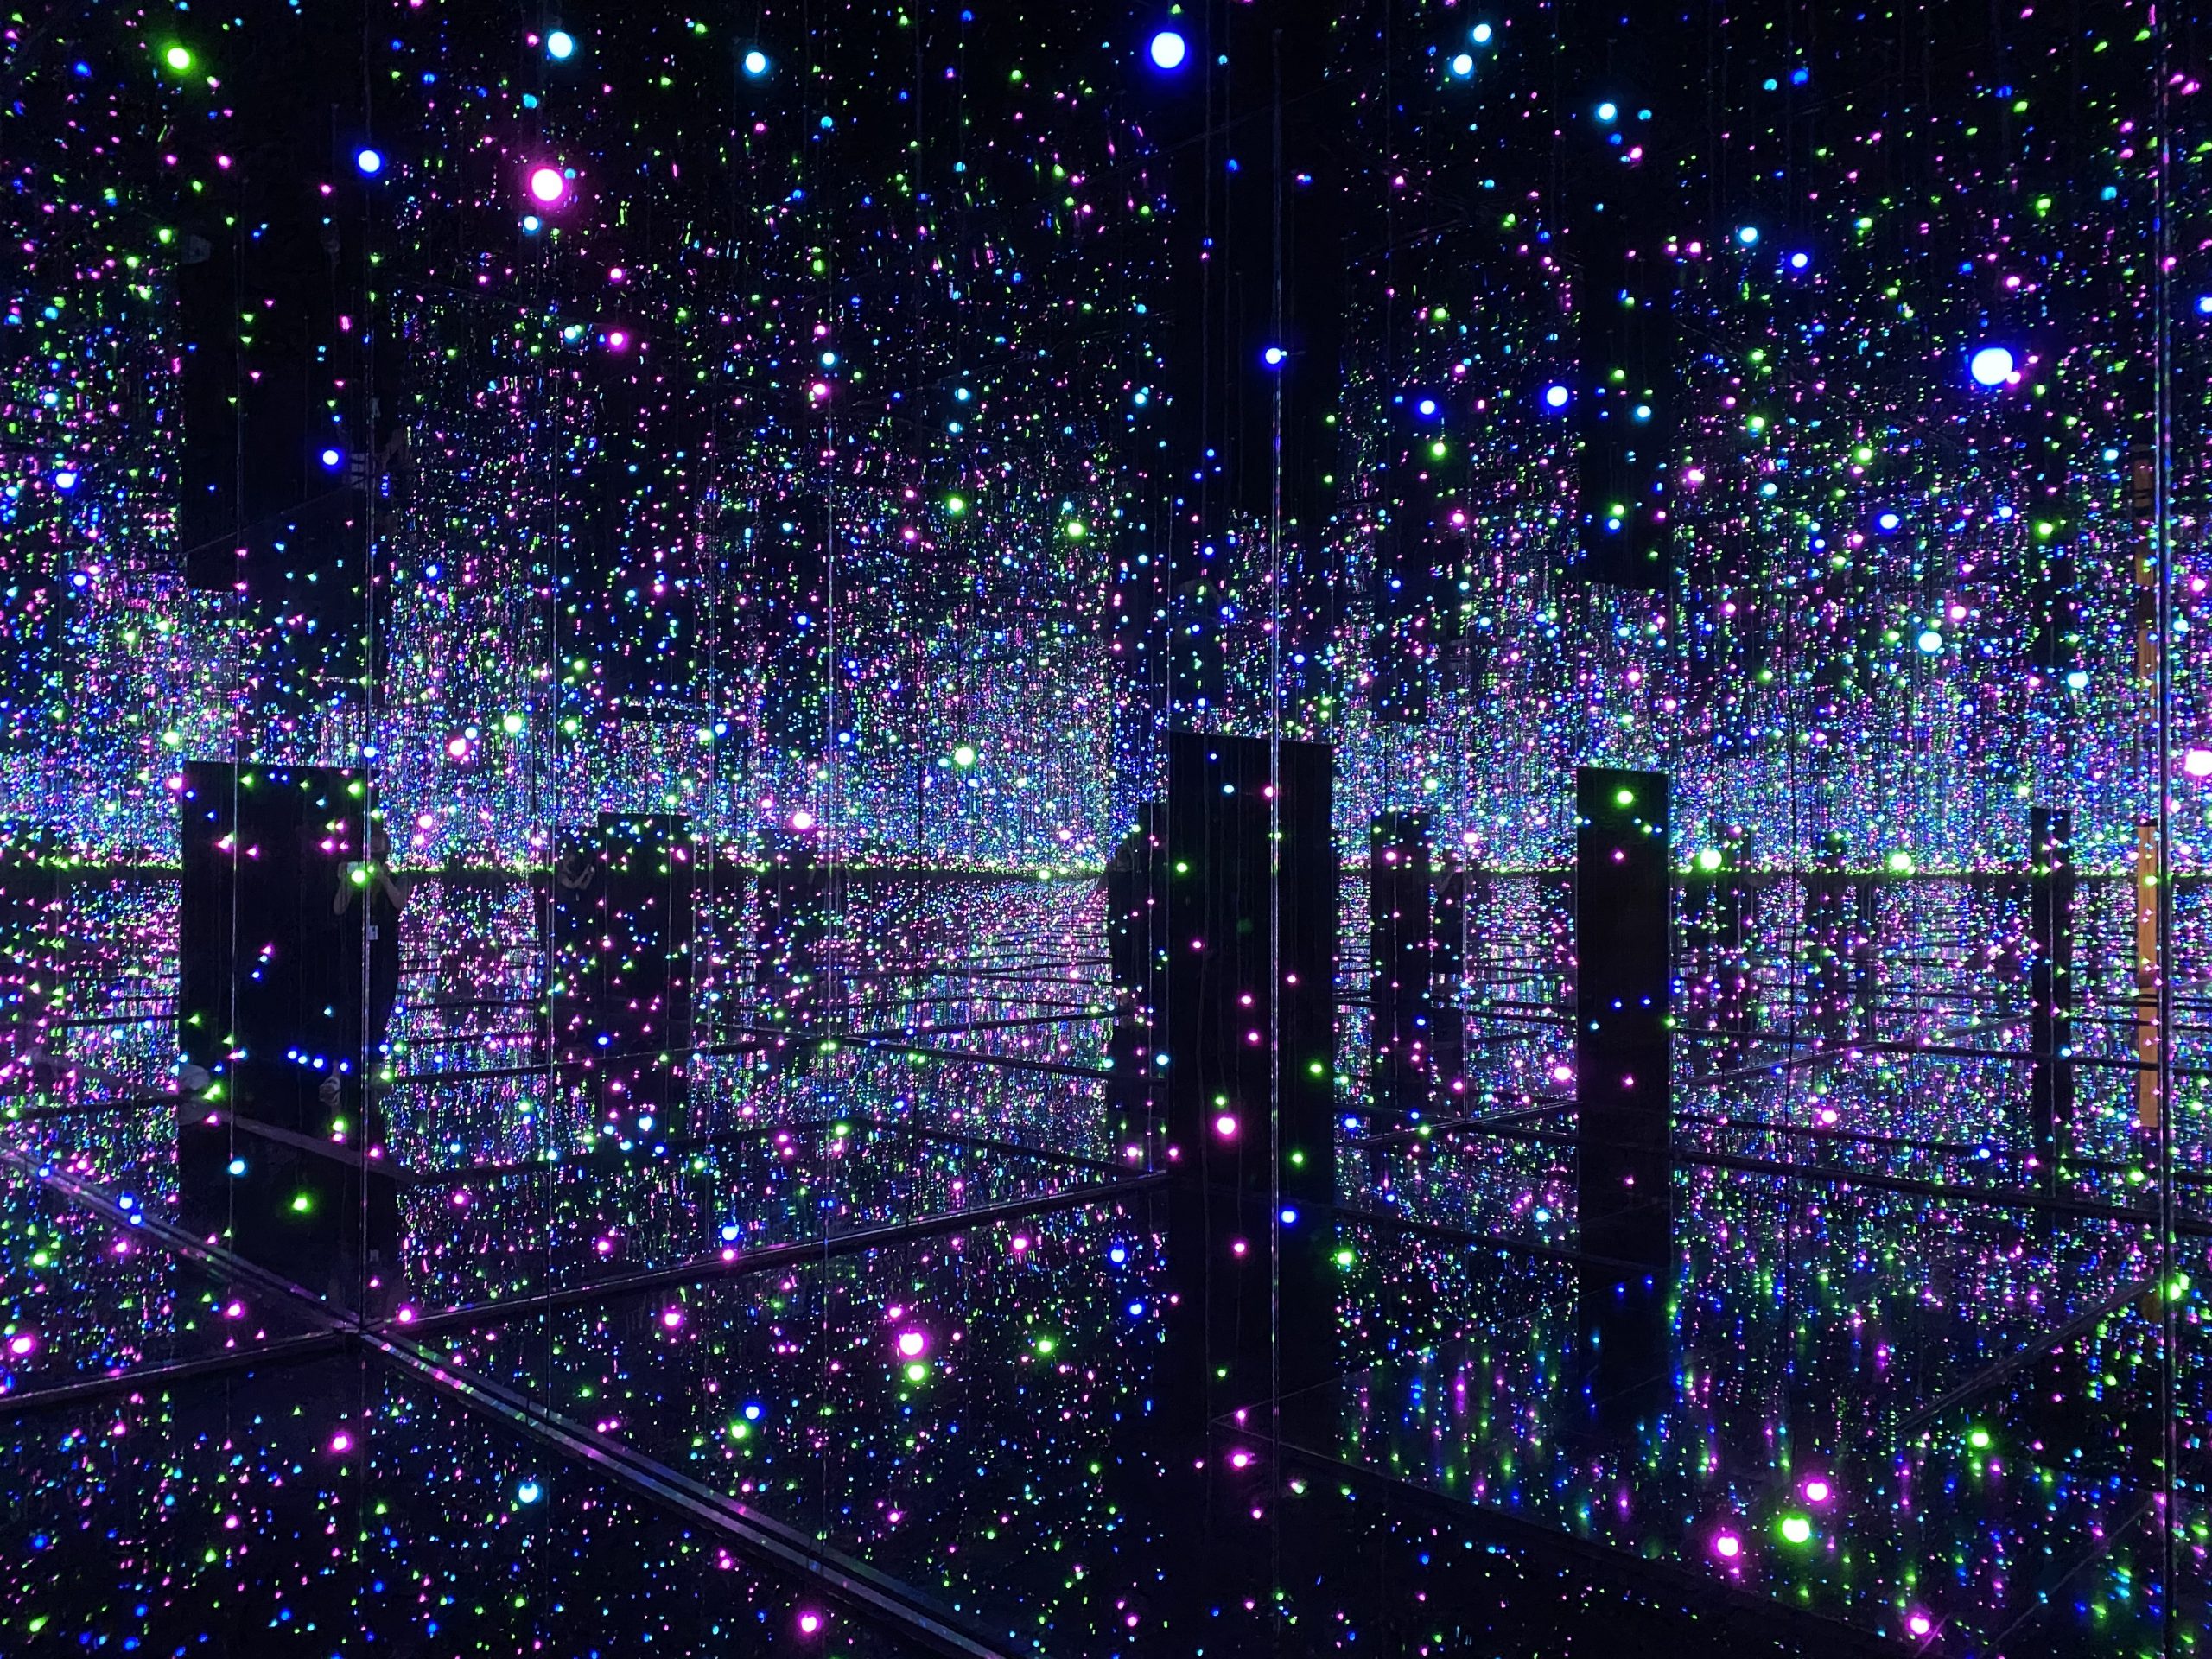 Yayoi Kusama: Infinity Rooms exhibition at Tate Modern